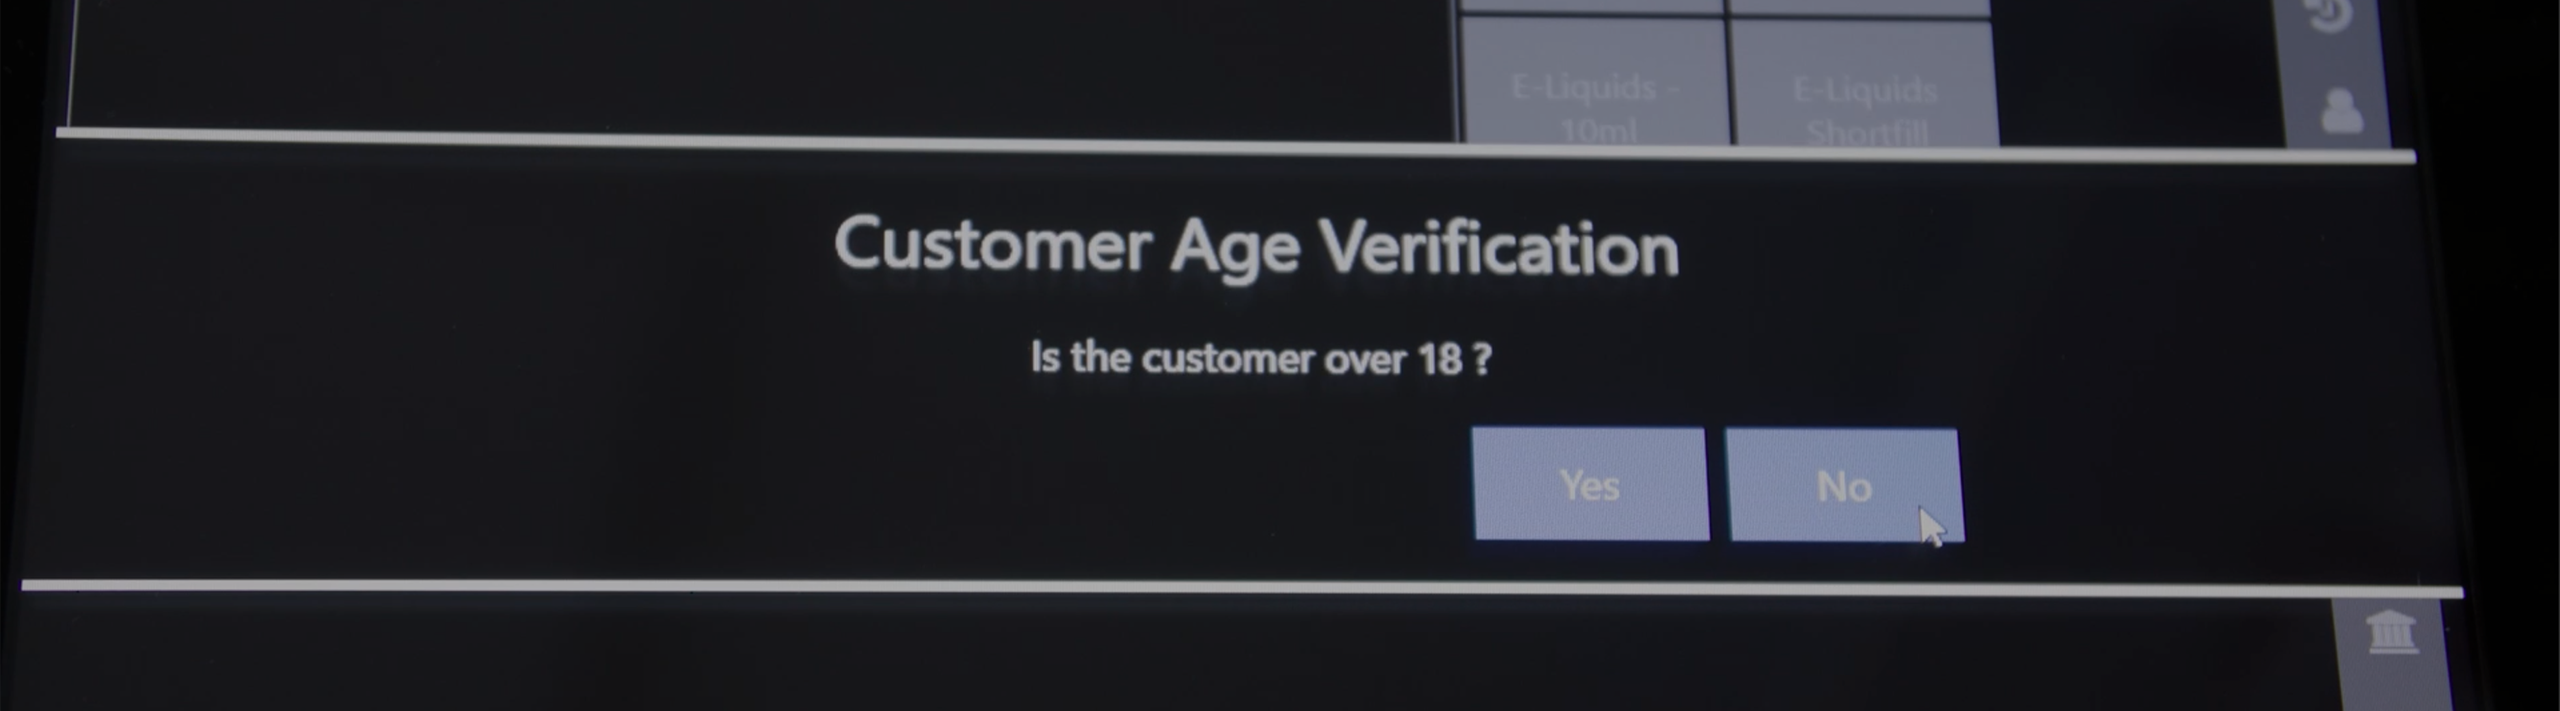 Enhanced age verification